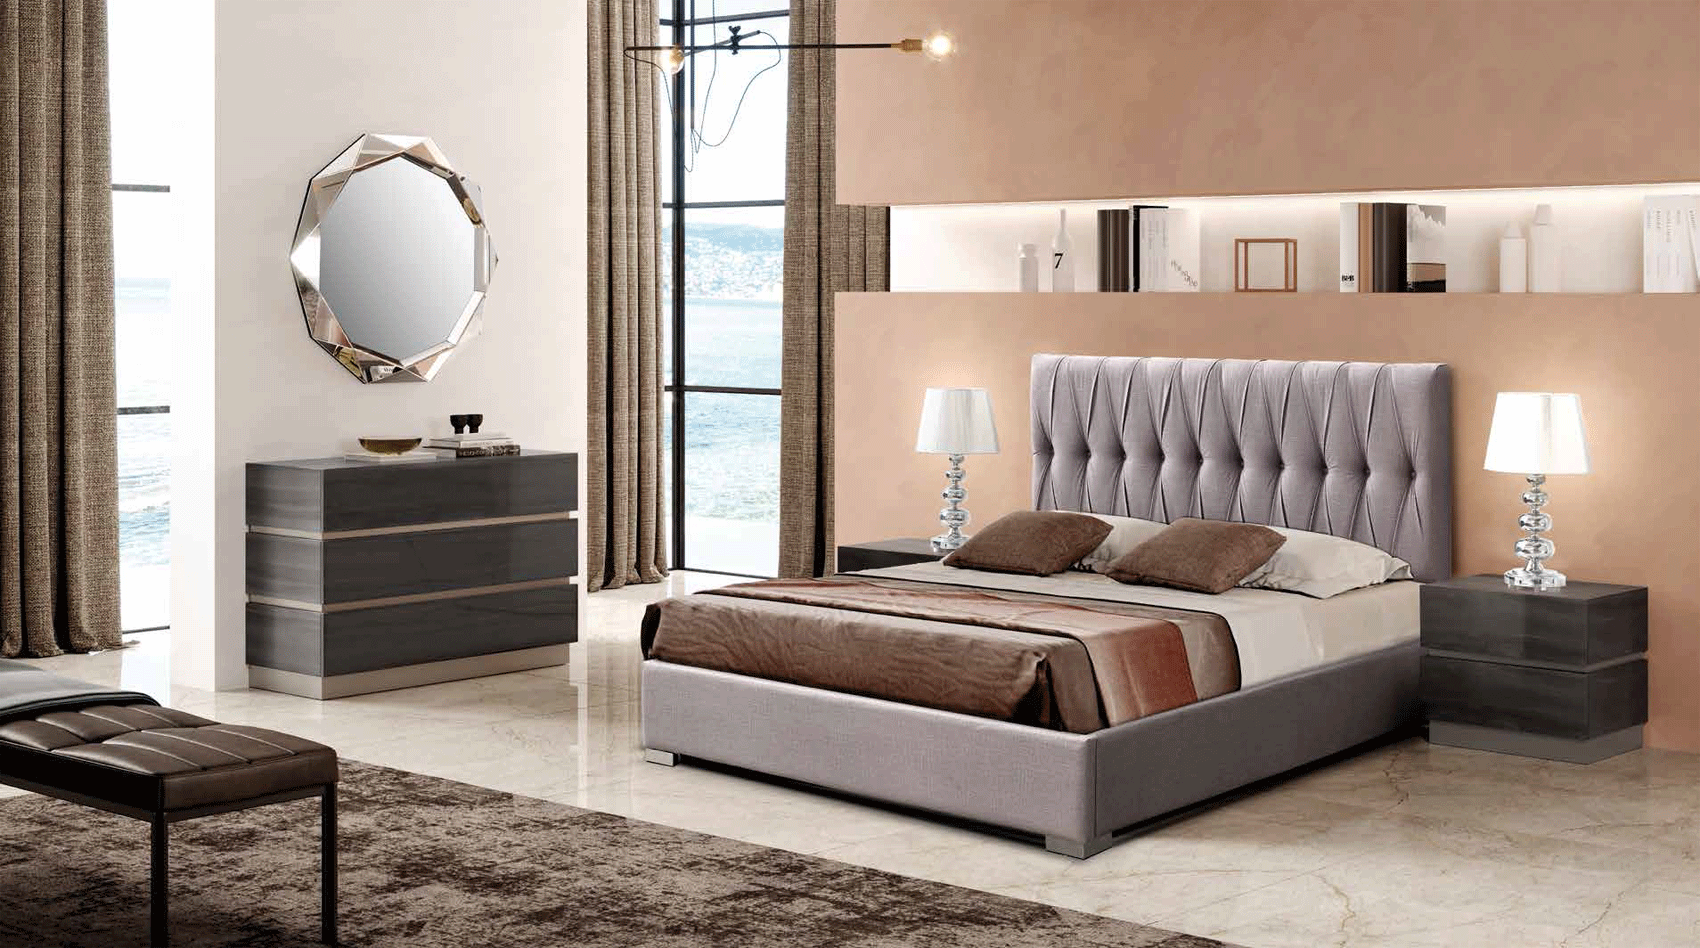 Bedroom Furniture Beds with storage 401 Mulan, M-151, C-151, E-413, YP440-N